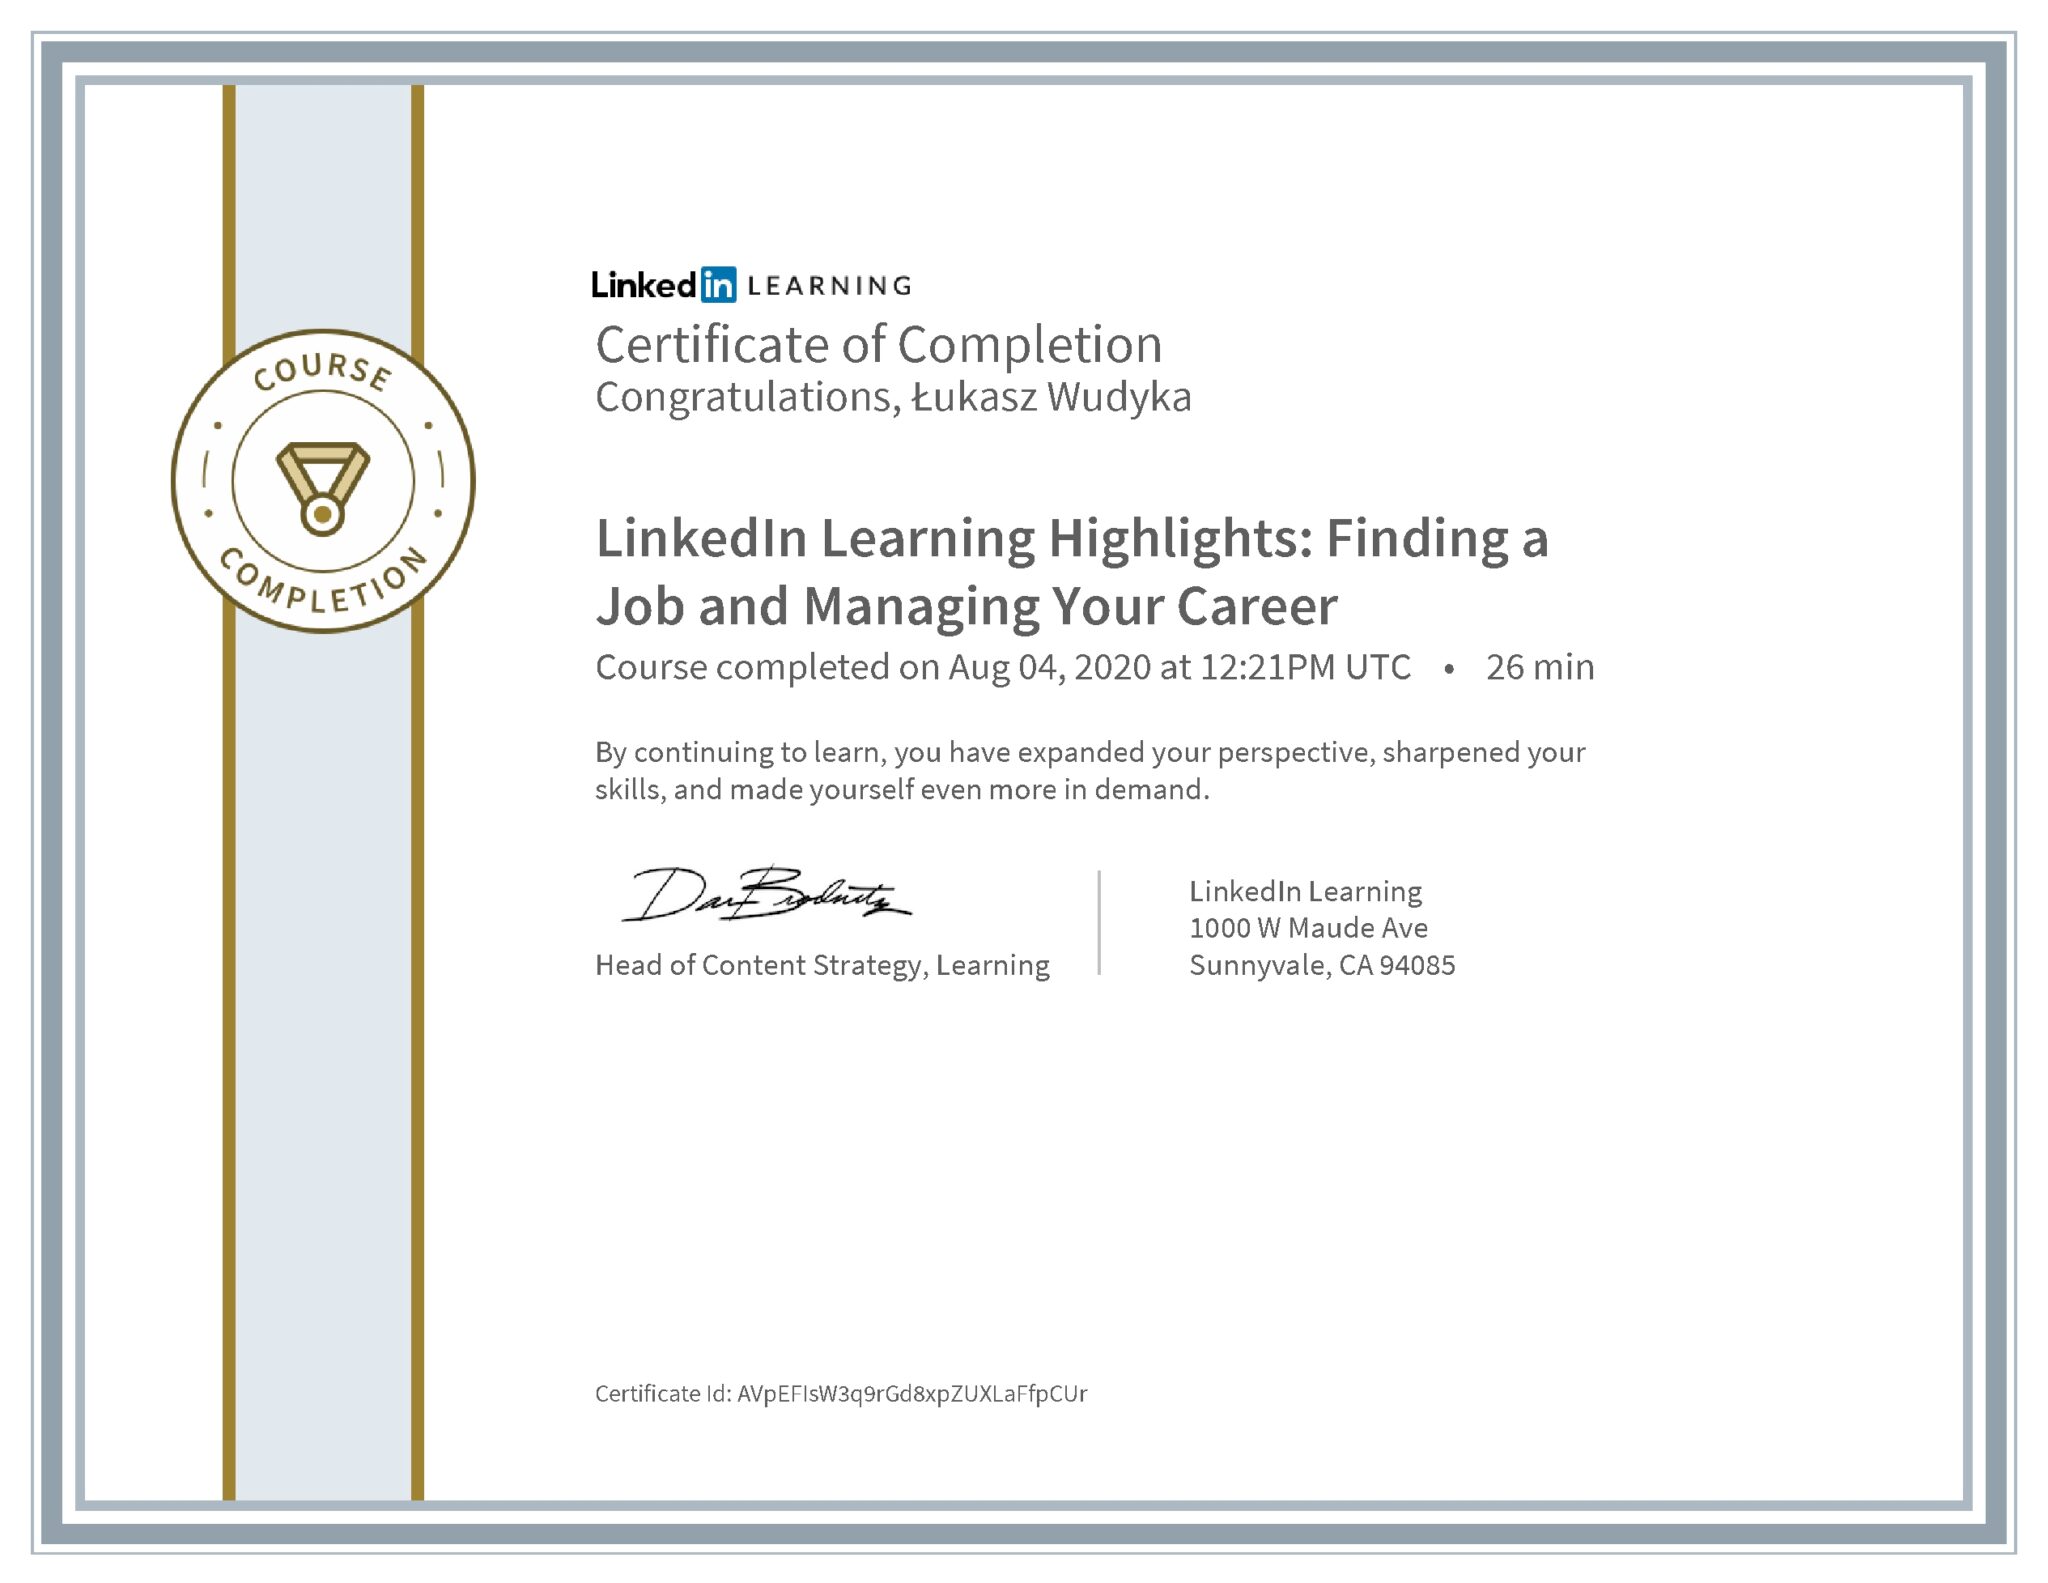 Łukasz Wudyka certyfikat LinkedIn LinkedIn Learning Highlights: Finding a Job and Managing Your Career